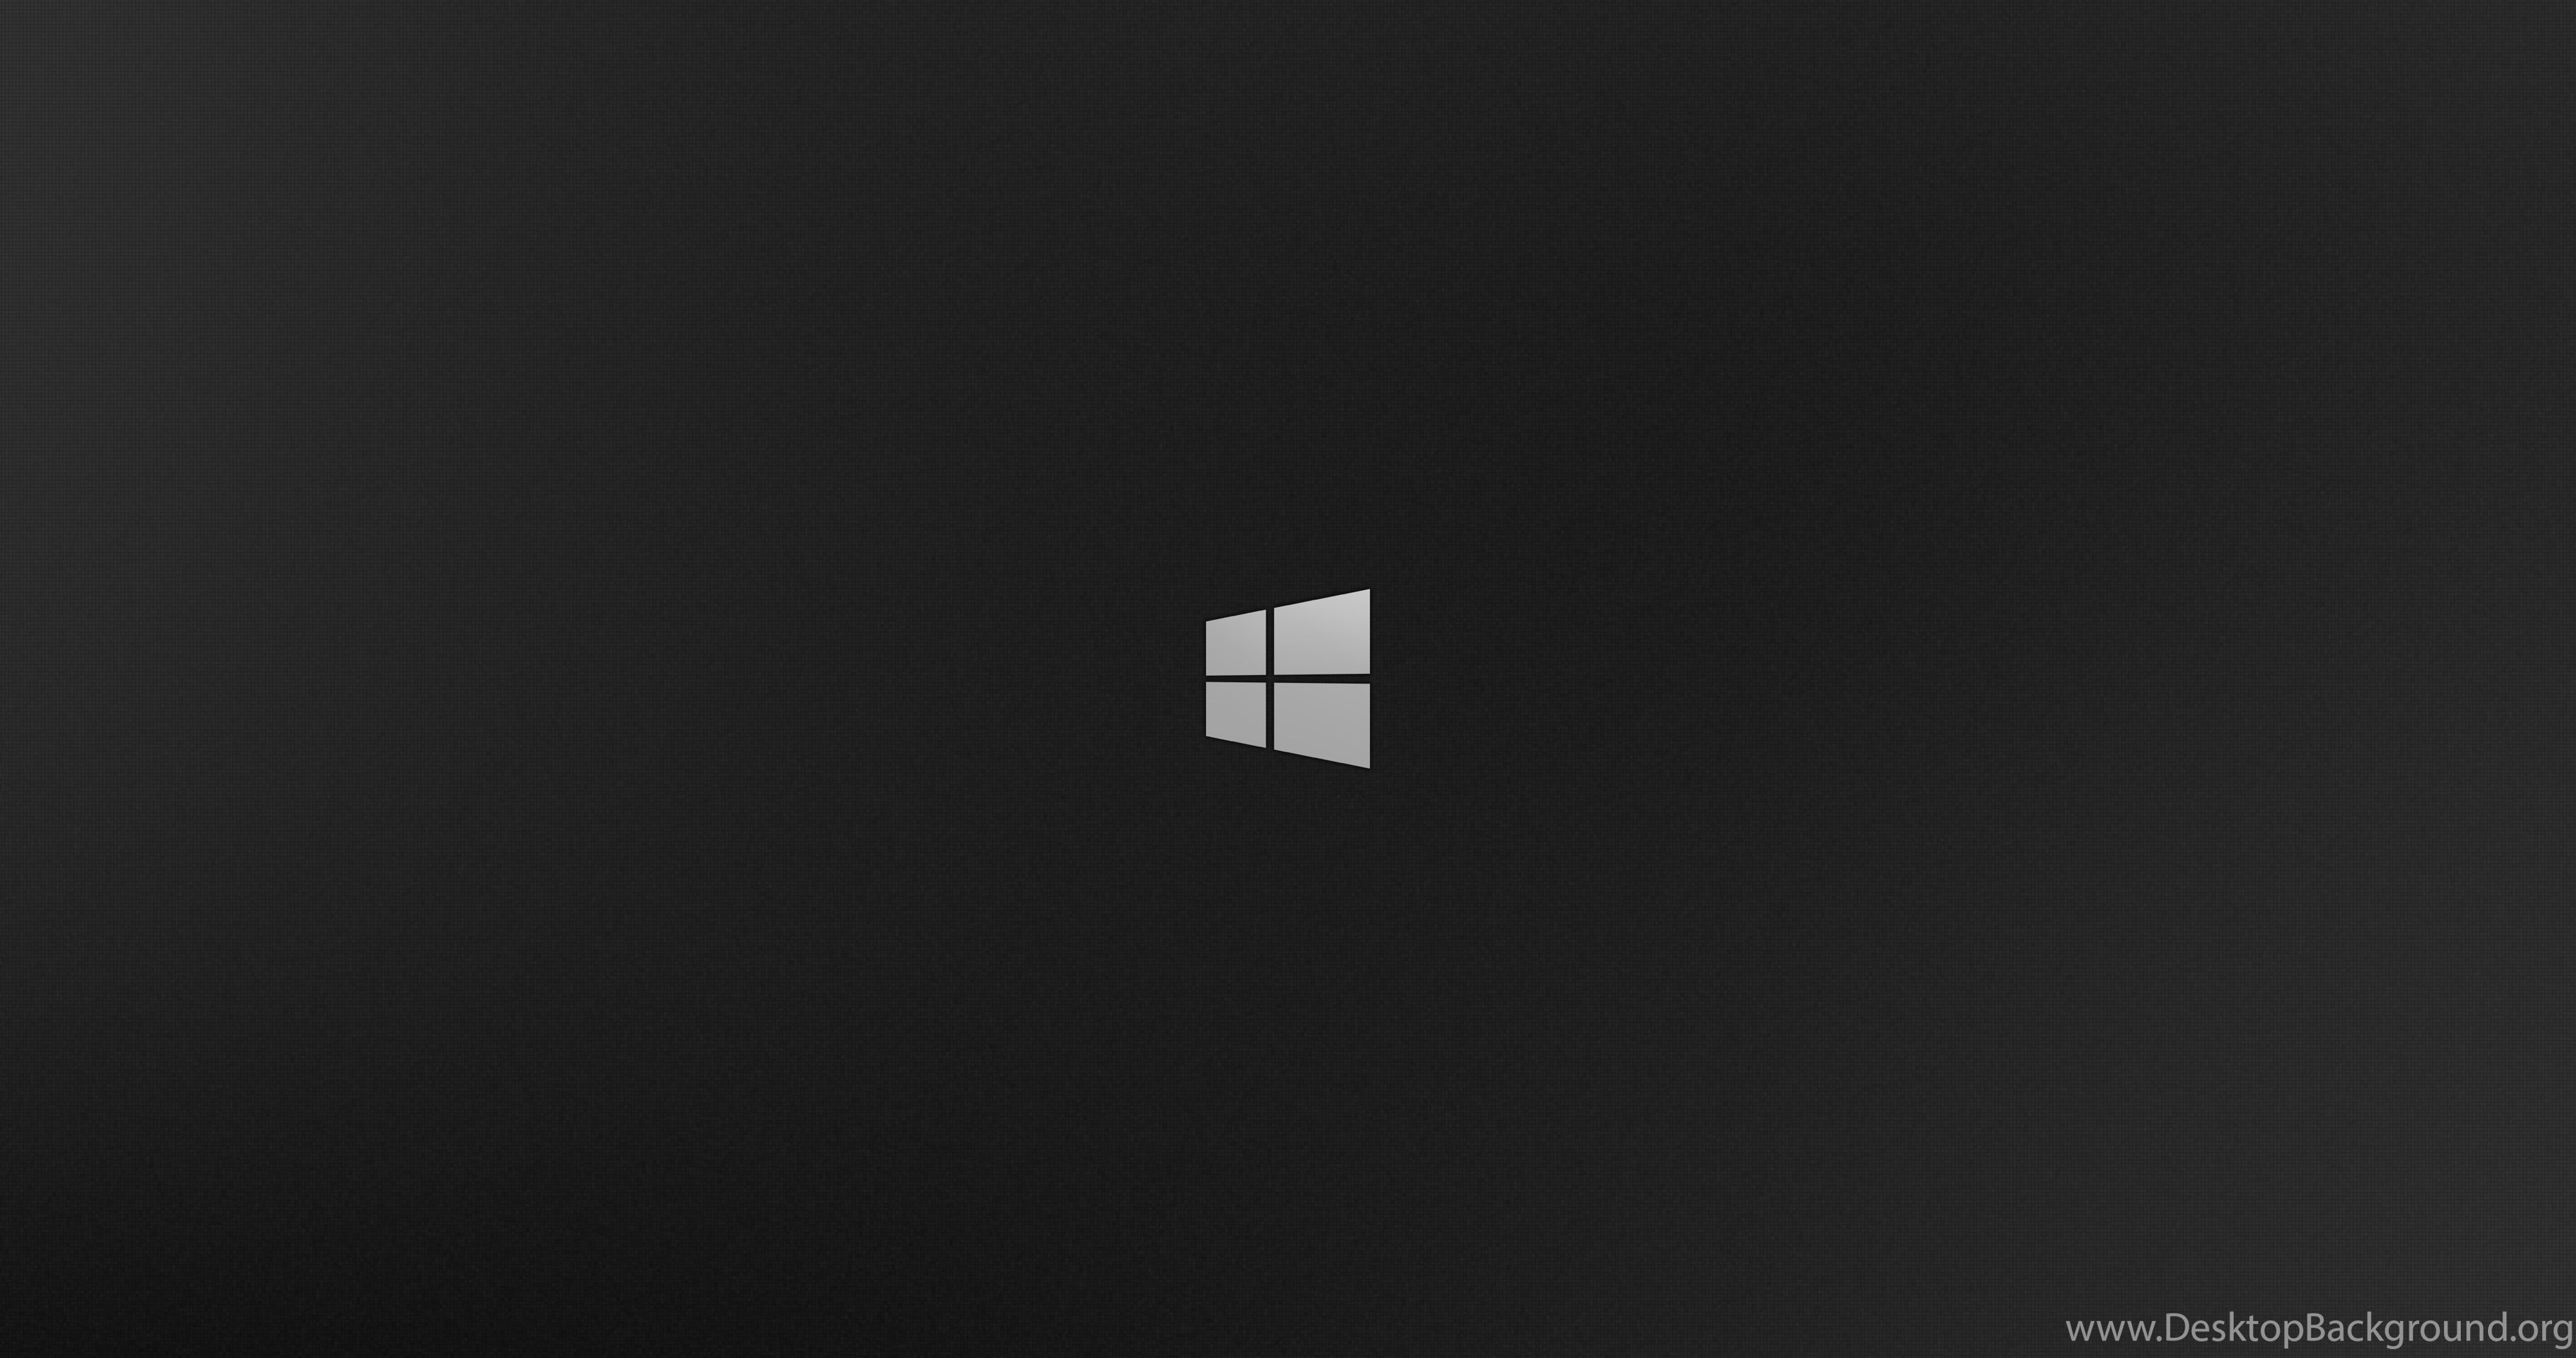  Windows  Black  Wallpapers  Desktop Background 